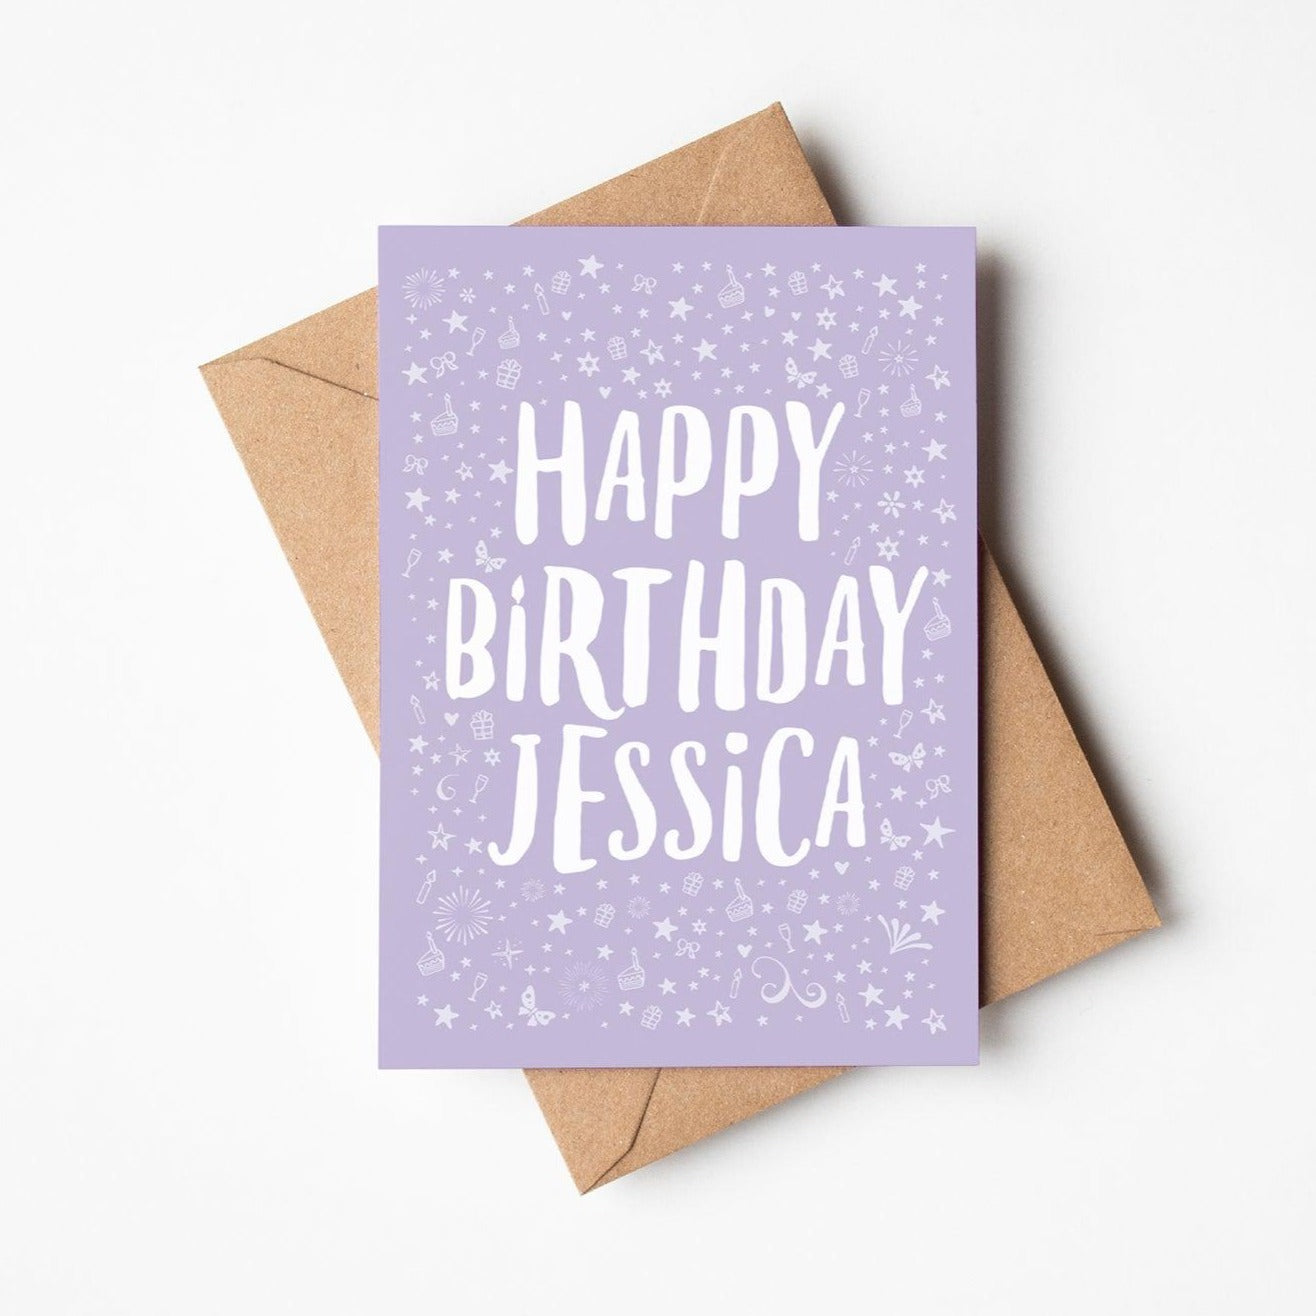 Personalised Happy Birthday Card in purple